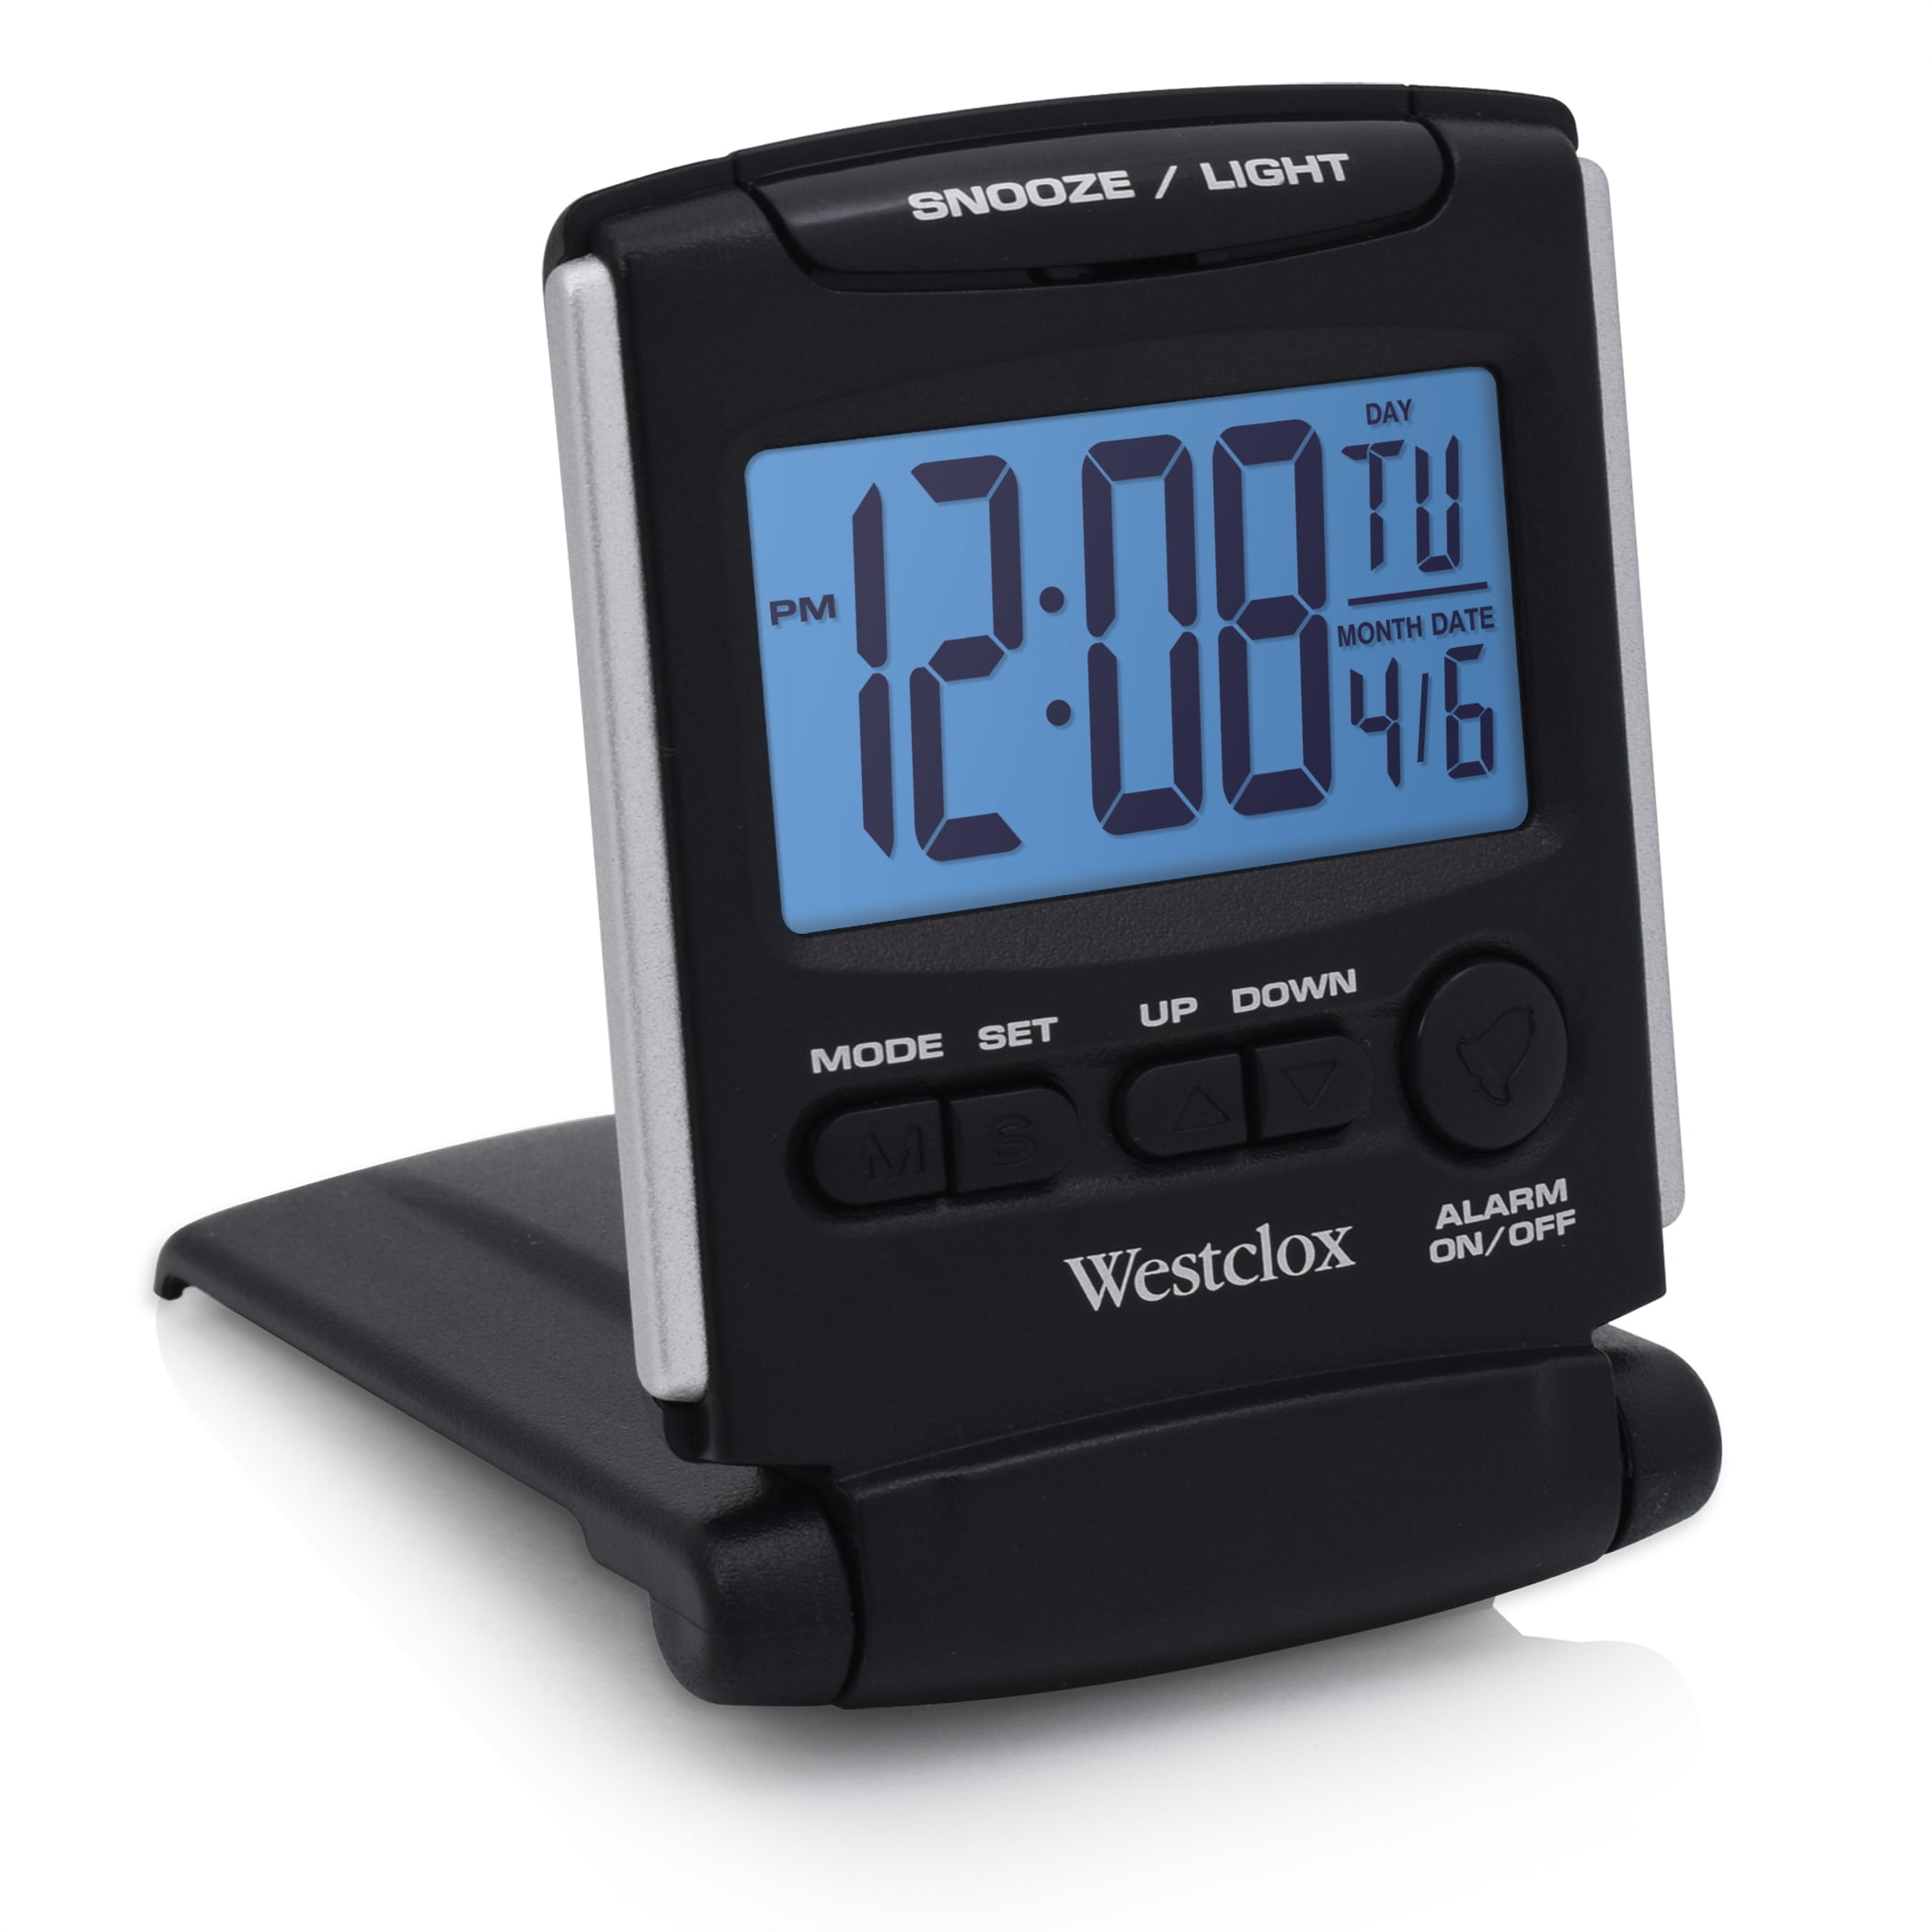 Westclox Digital Black and Gray Wall Clock Alarm w/ Snooze and Large LCD Display 